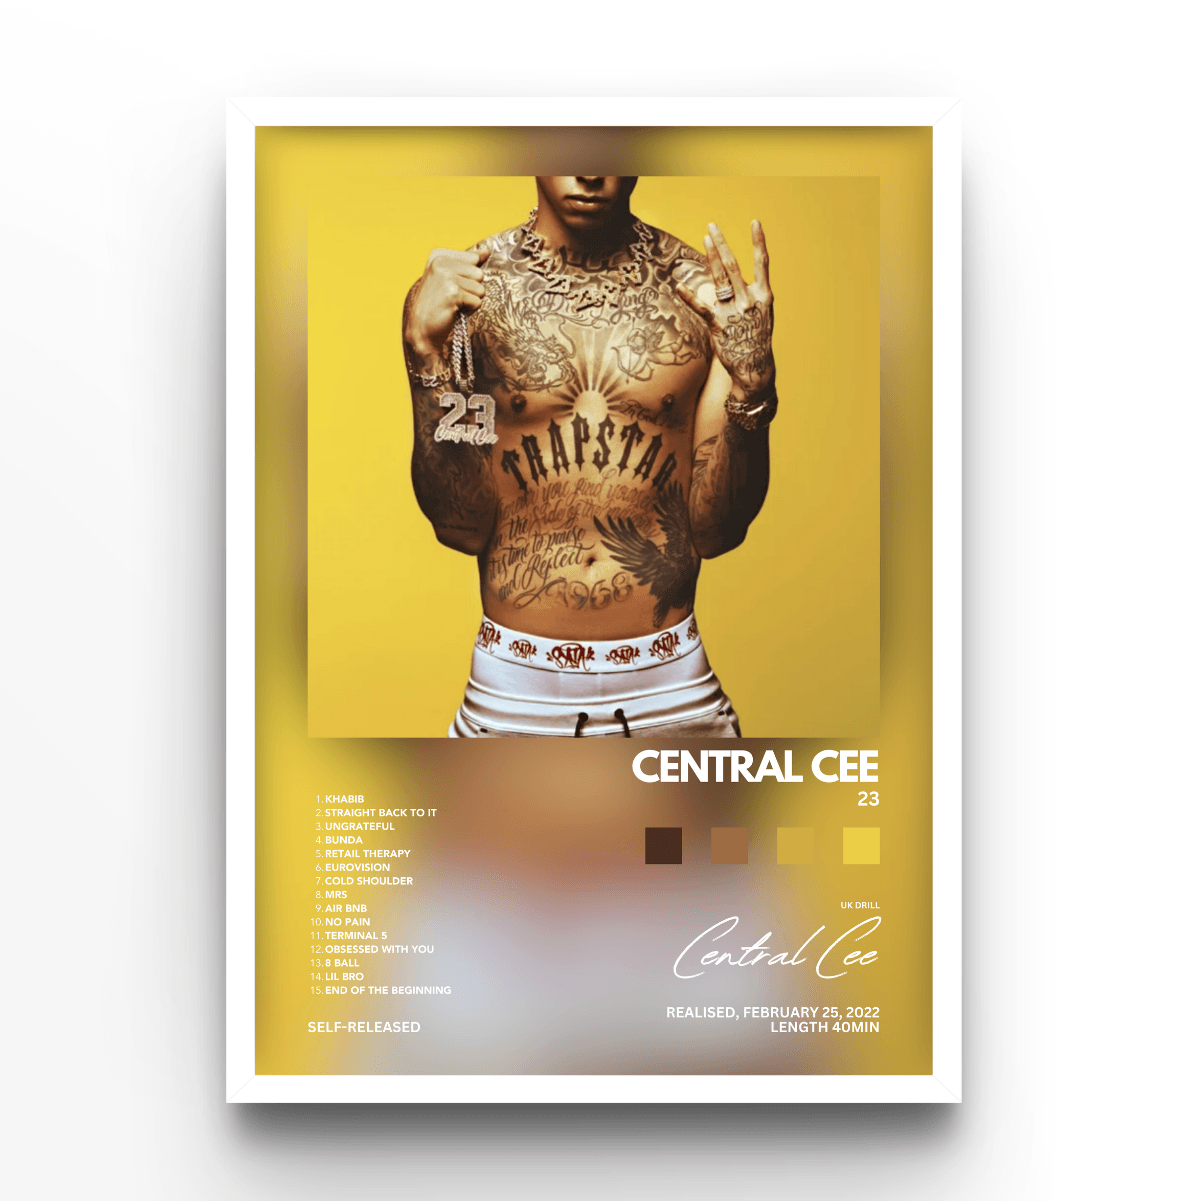 Central Cee 23 Album - A4, A3, A2 Posters Base - Poster Print Shop / Art Prints / PostersBase